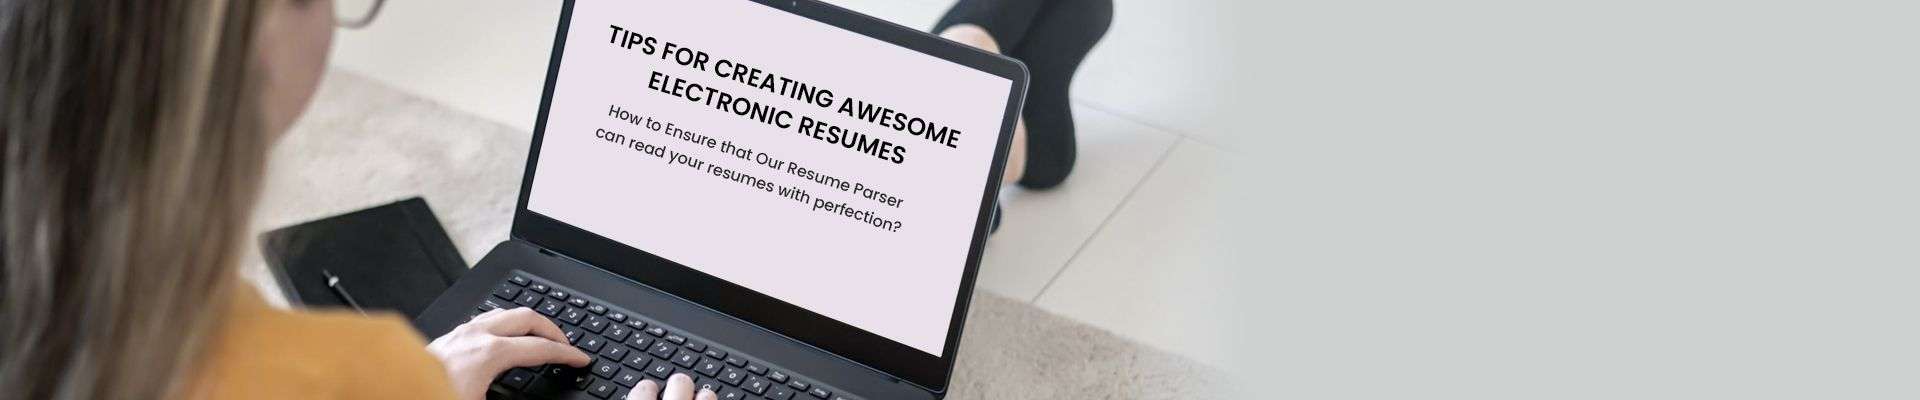 resume writing tips-1